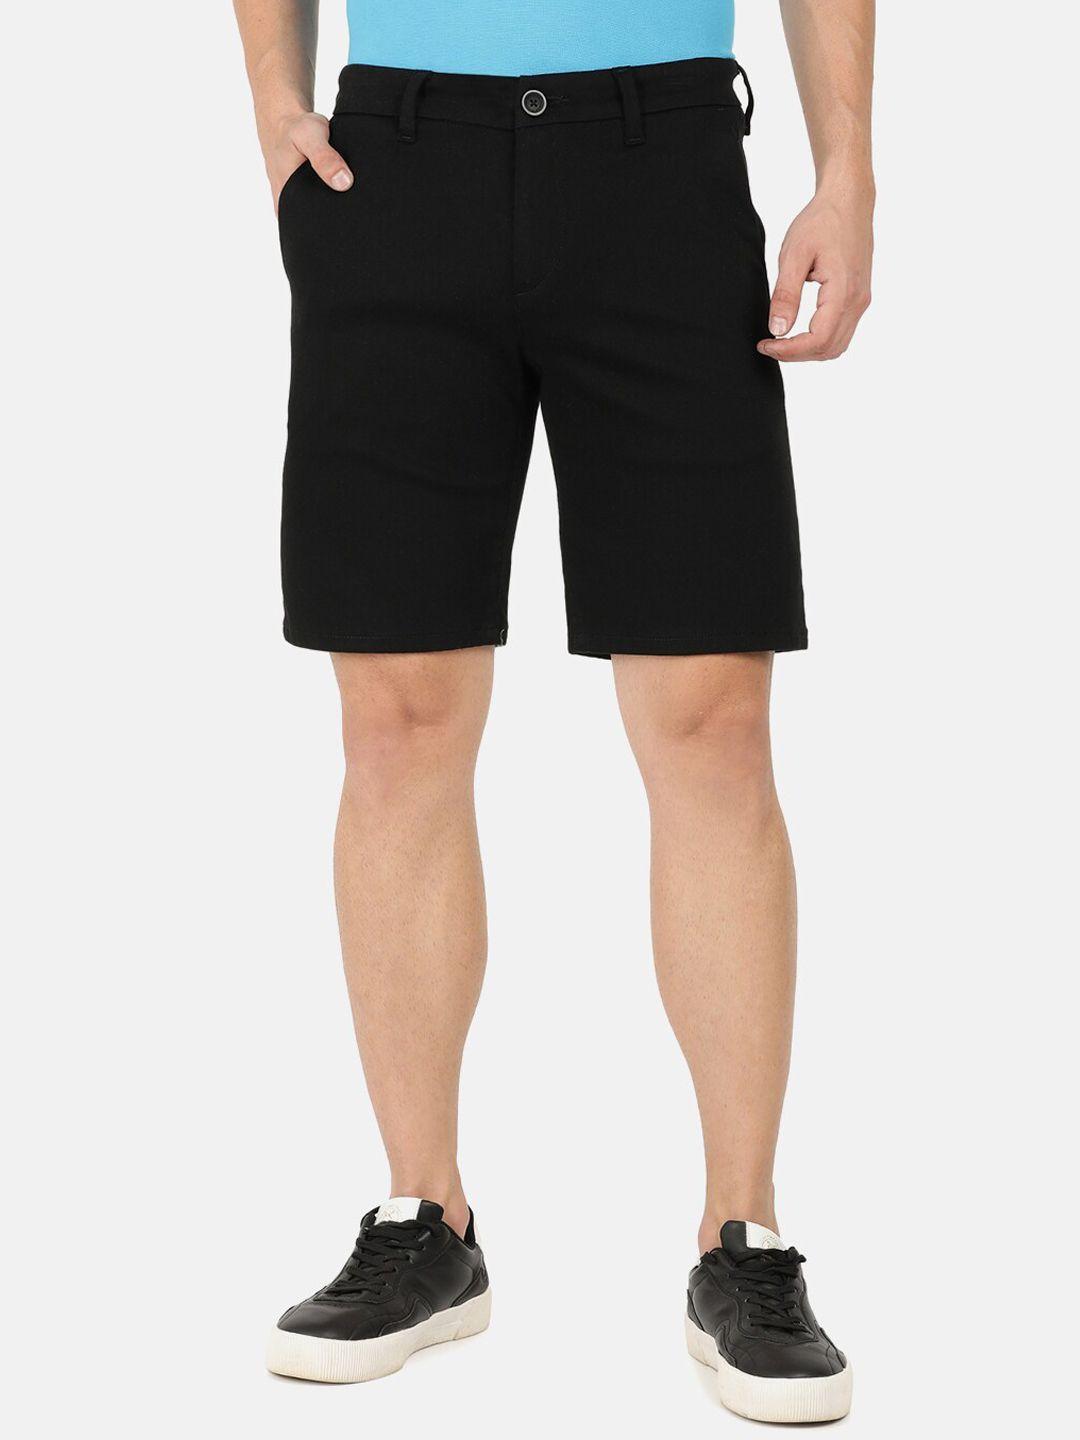 everblue-men-black-mid-rise-cross-pocket-shorts